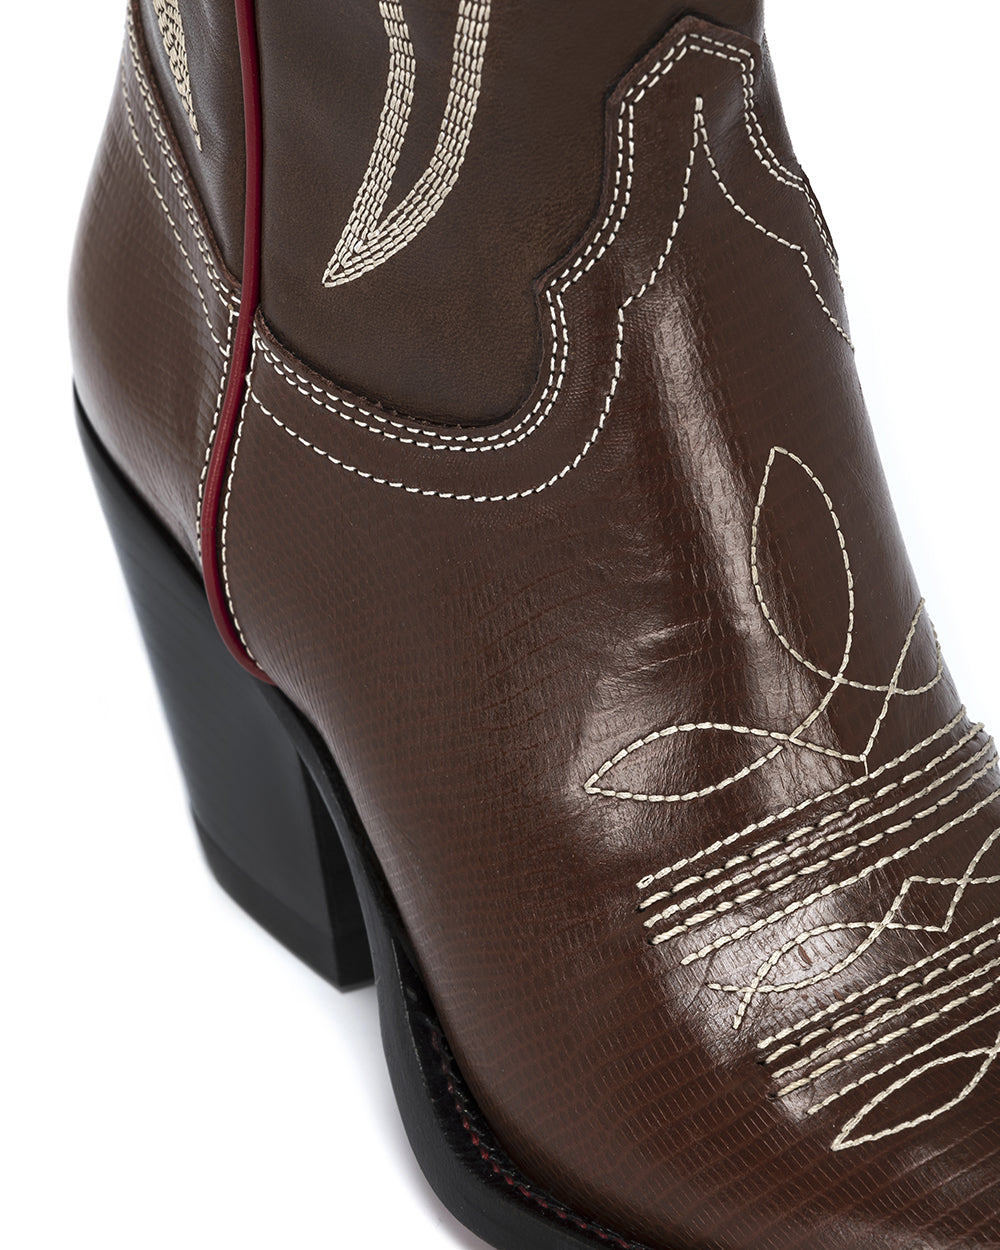 SANTA FE Women's Cowboy Boots in Brown Vacchetta and Printed Lizard | Ecru Embroidery